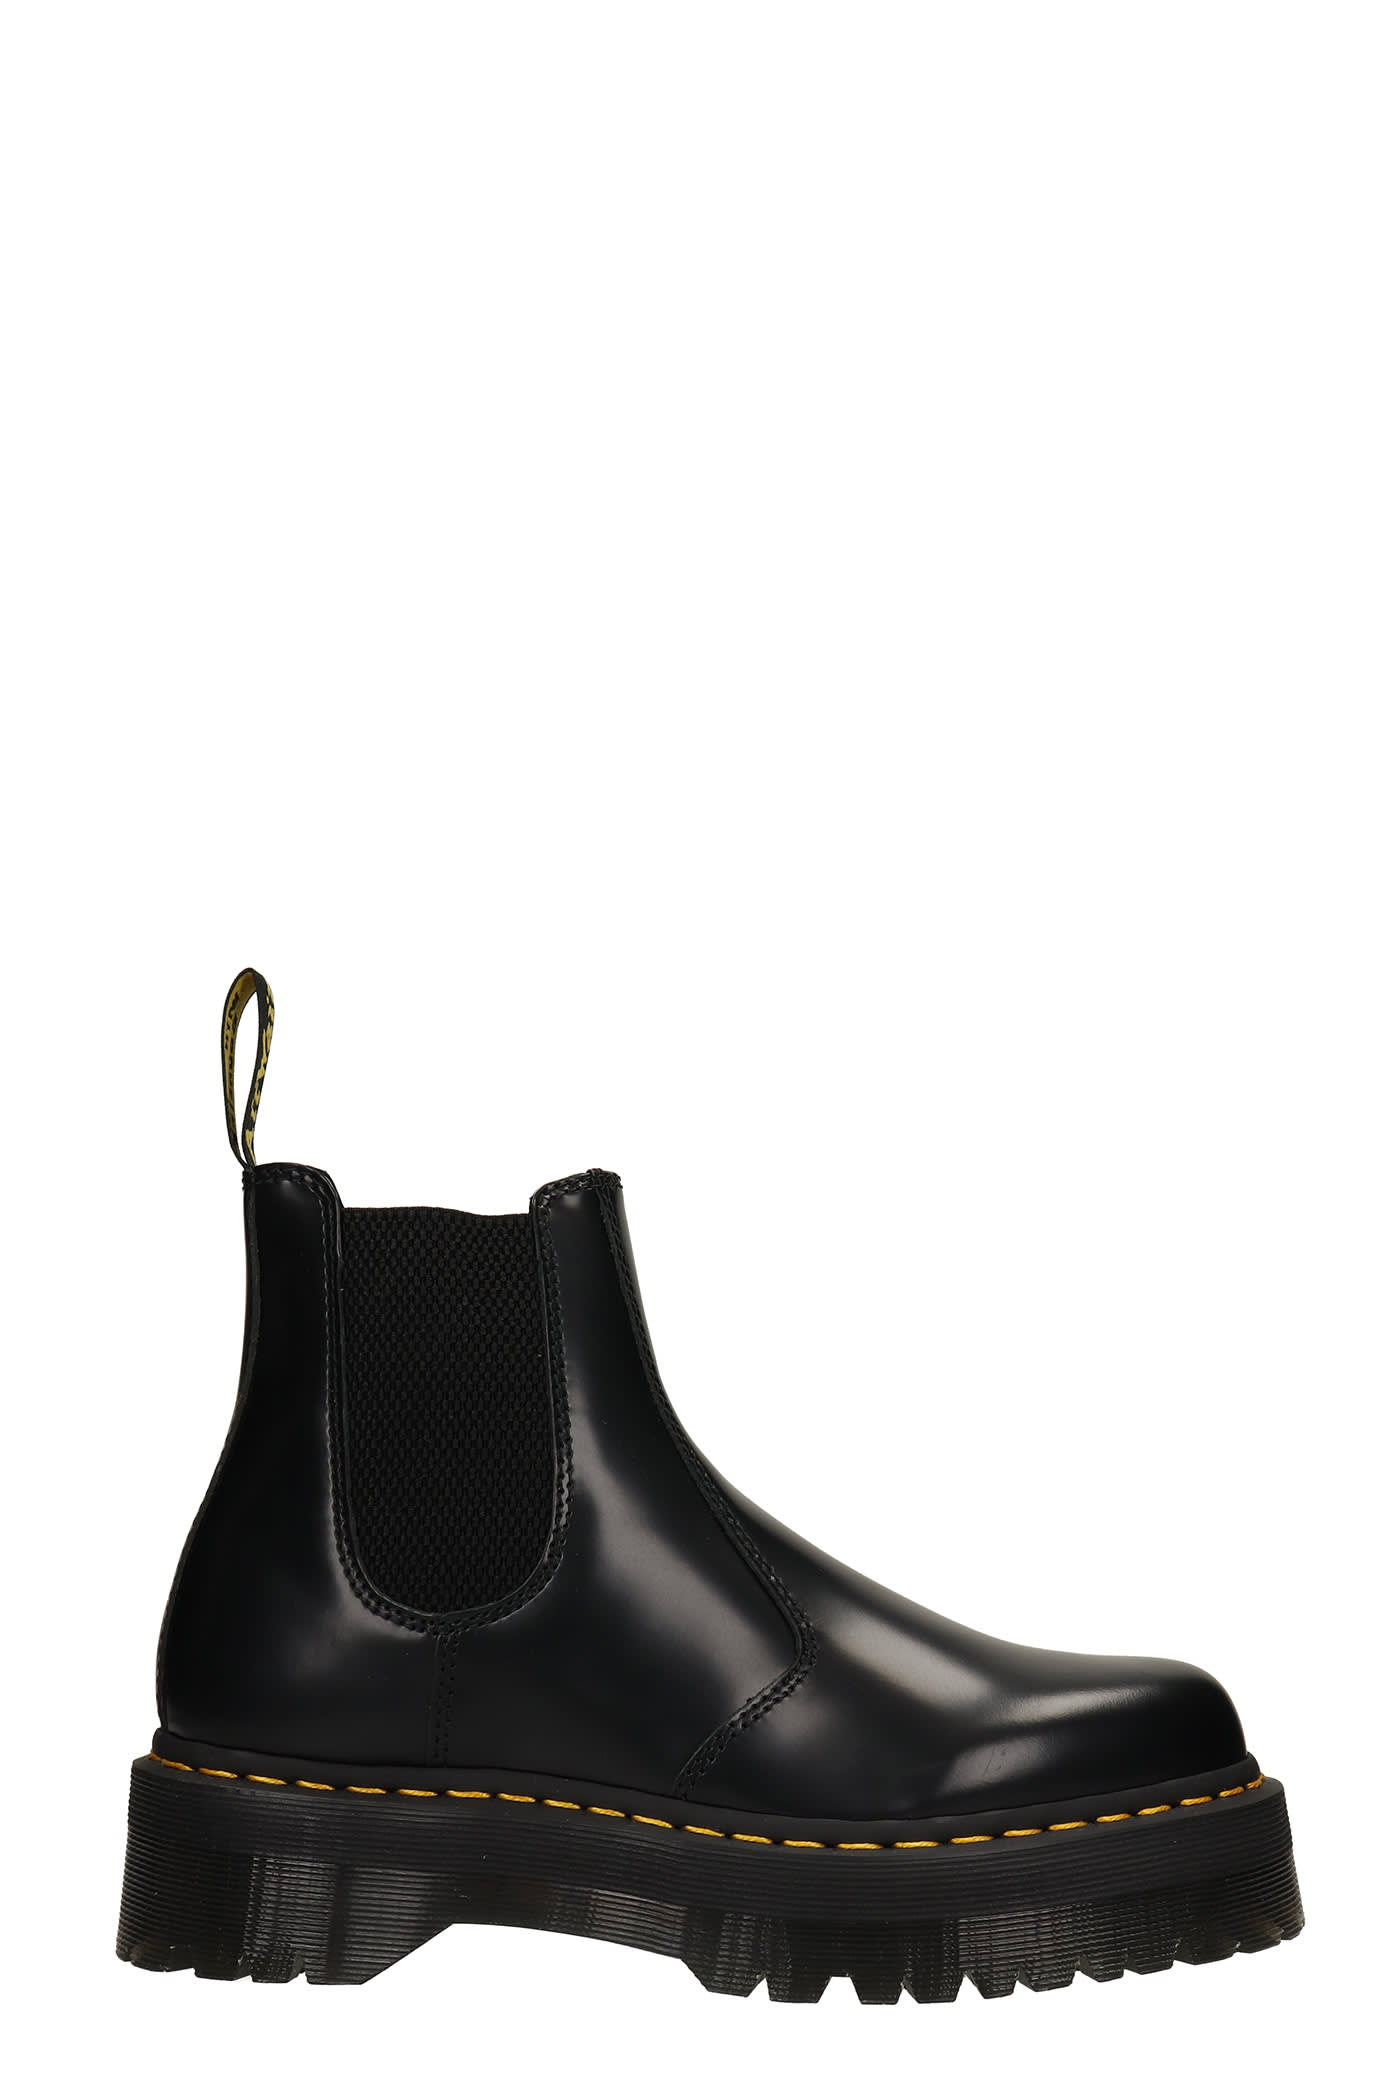 Dr. Martens 2976 Quad Combat Boots In Black Leather